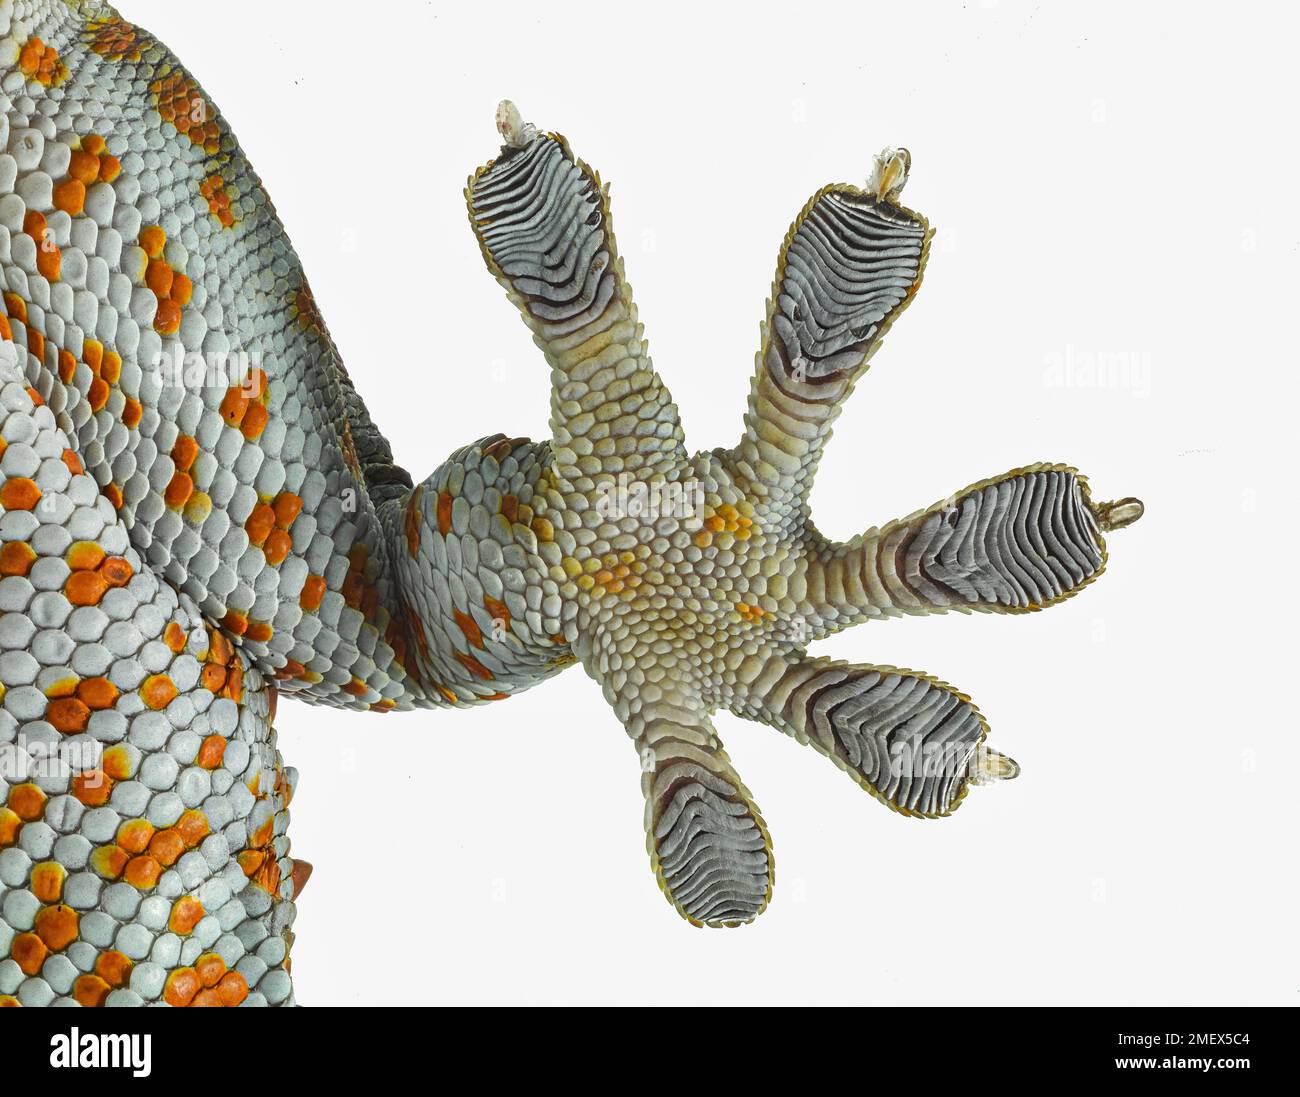 https://c8.alamy.com/comp/2MEX5C4/tokay-gecko-gekko-gecko-climbing-glass-from-below-close-up-of-foot-with-sticky-toe-pads-2MEX5C4.jpg